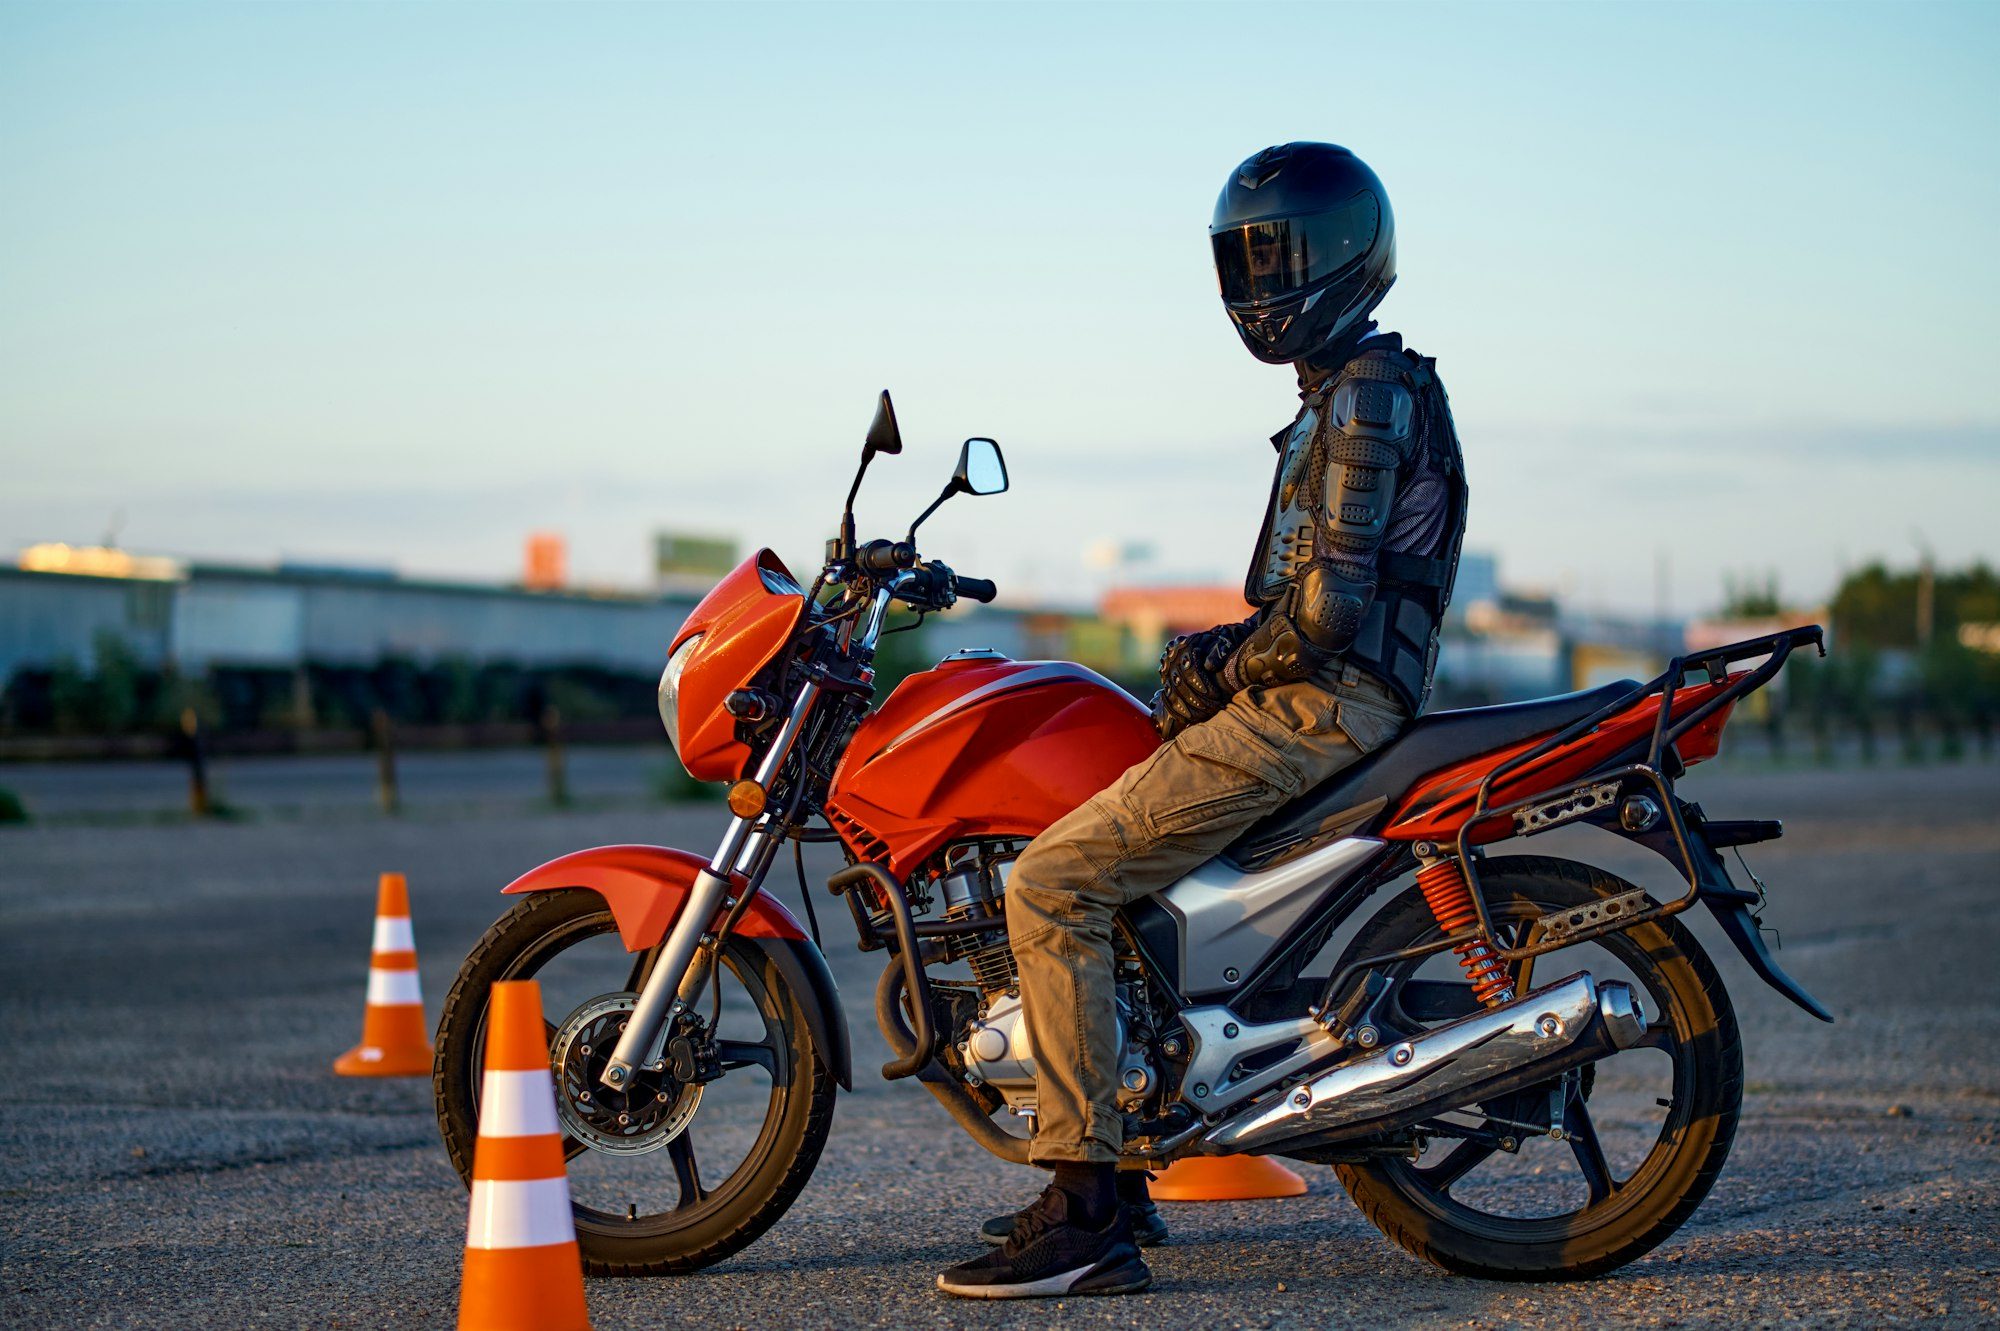 Male student poses on motorbike, motorcycle school